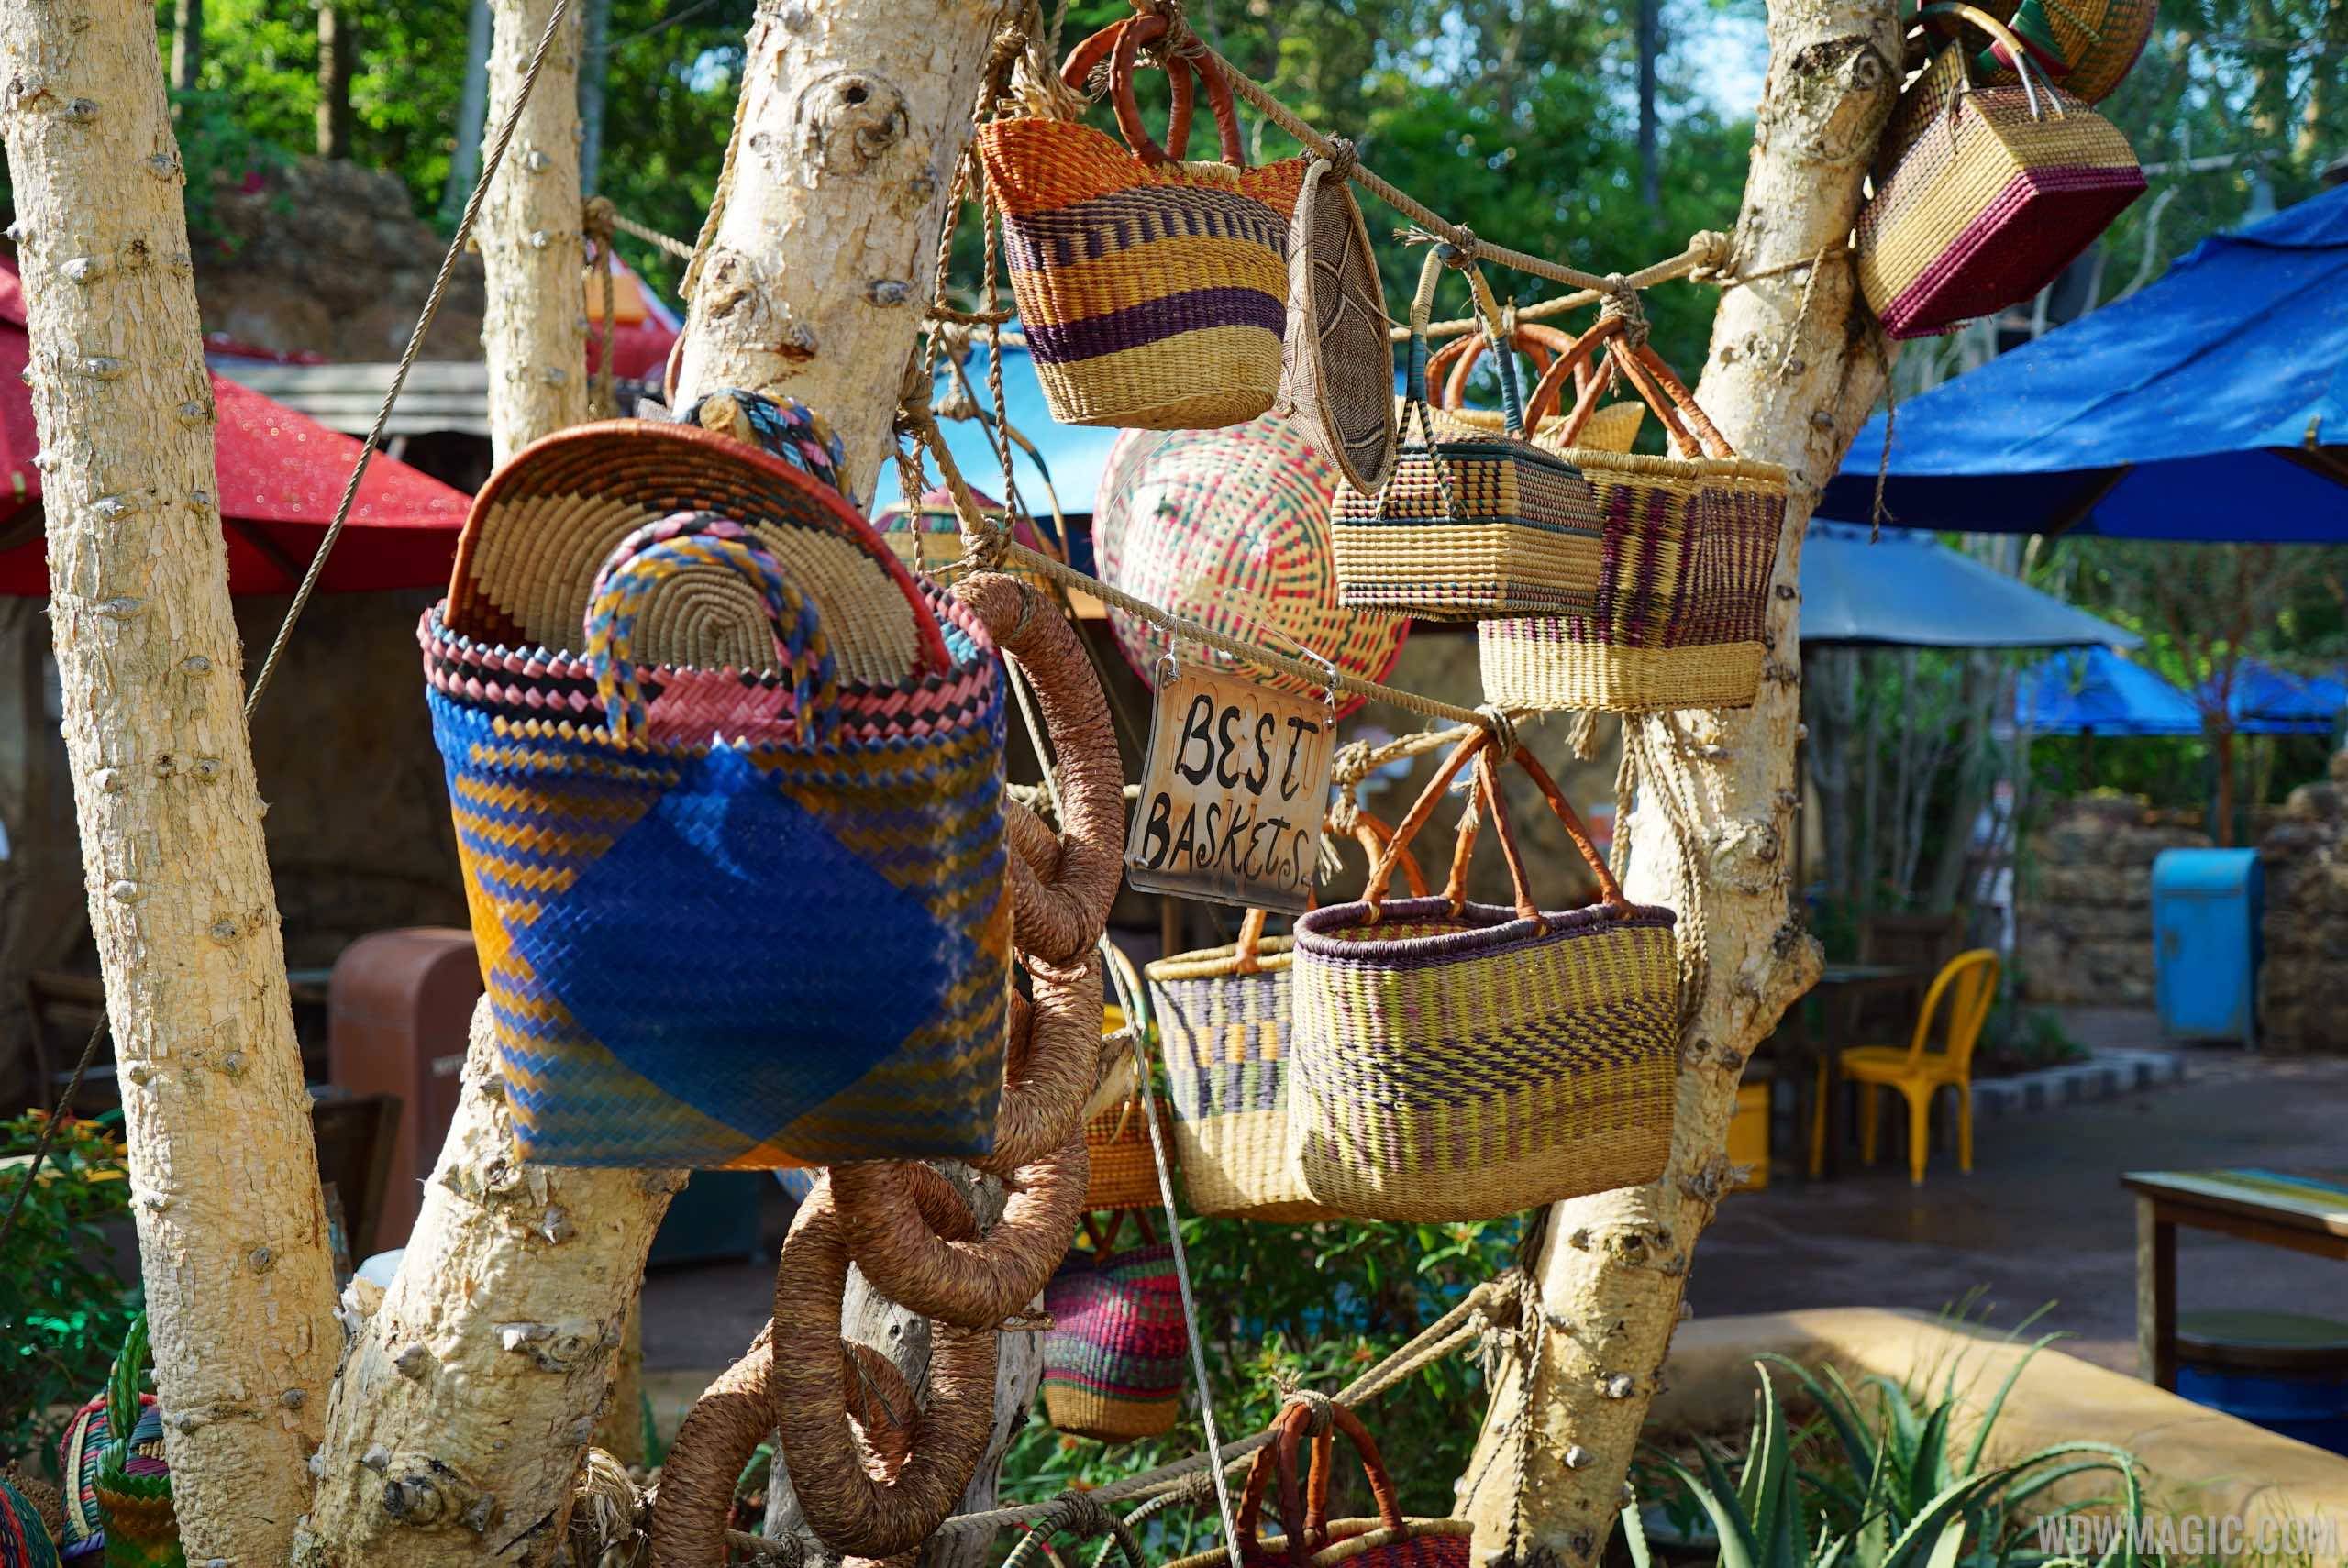 Harambe Market - Best Baskets